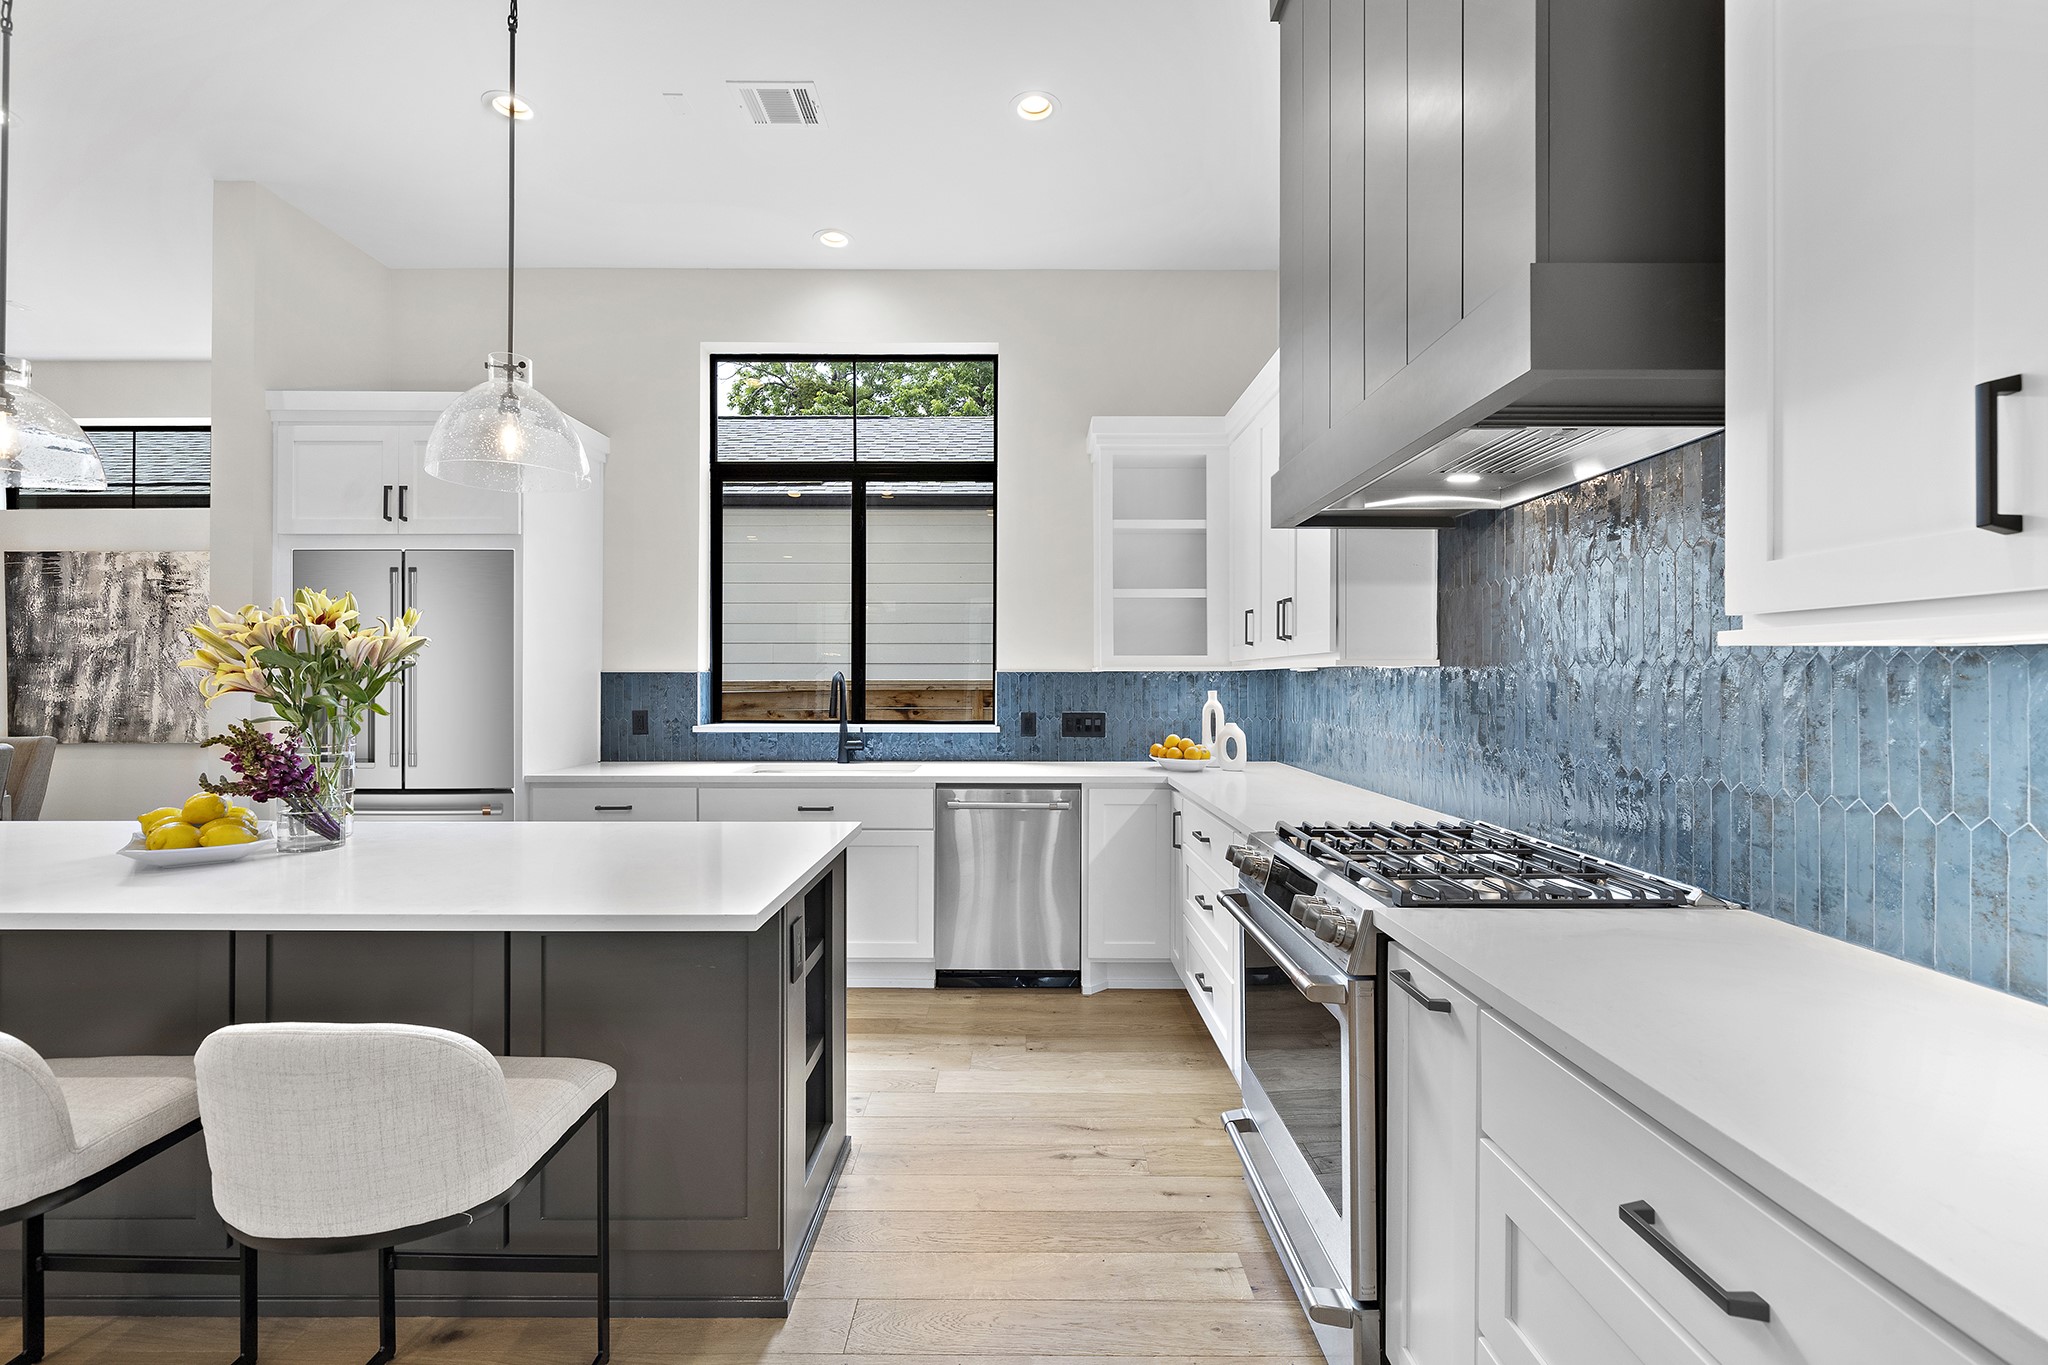 Sleek white shaker style cabinets pop against the gorgeous moroccan blue tile backsplash.